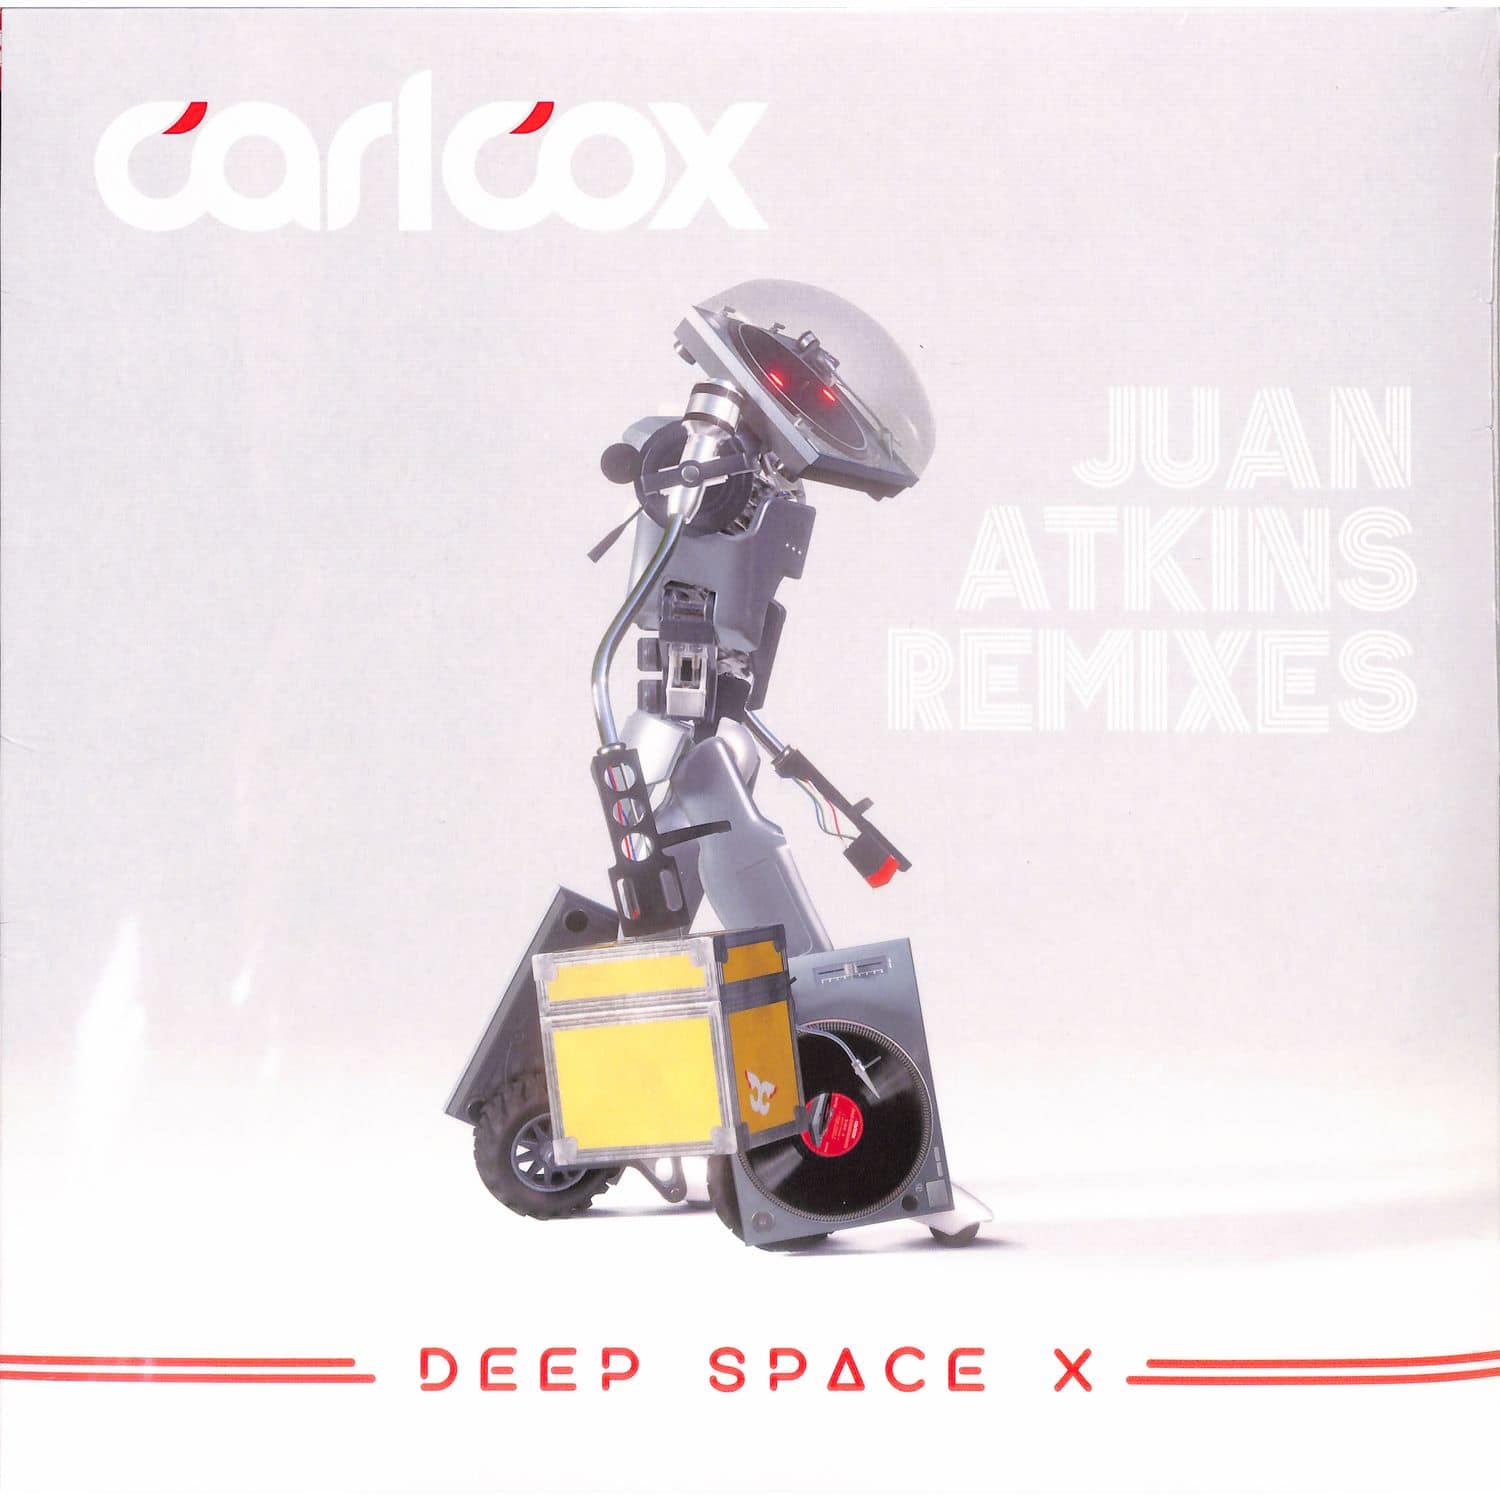 Carl Cox - DEEP SPACE X 